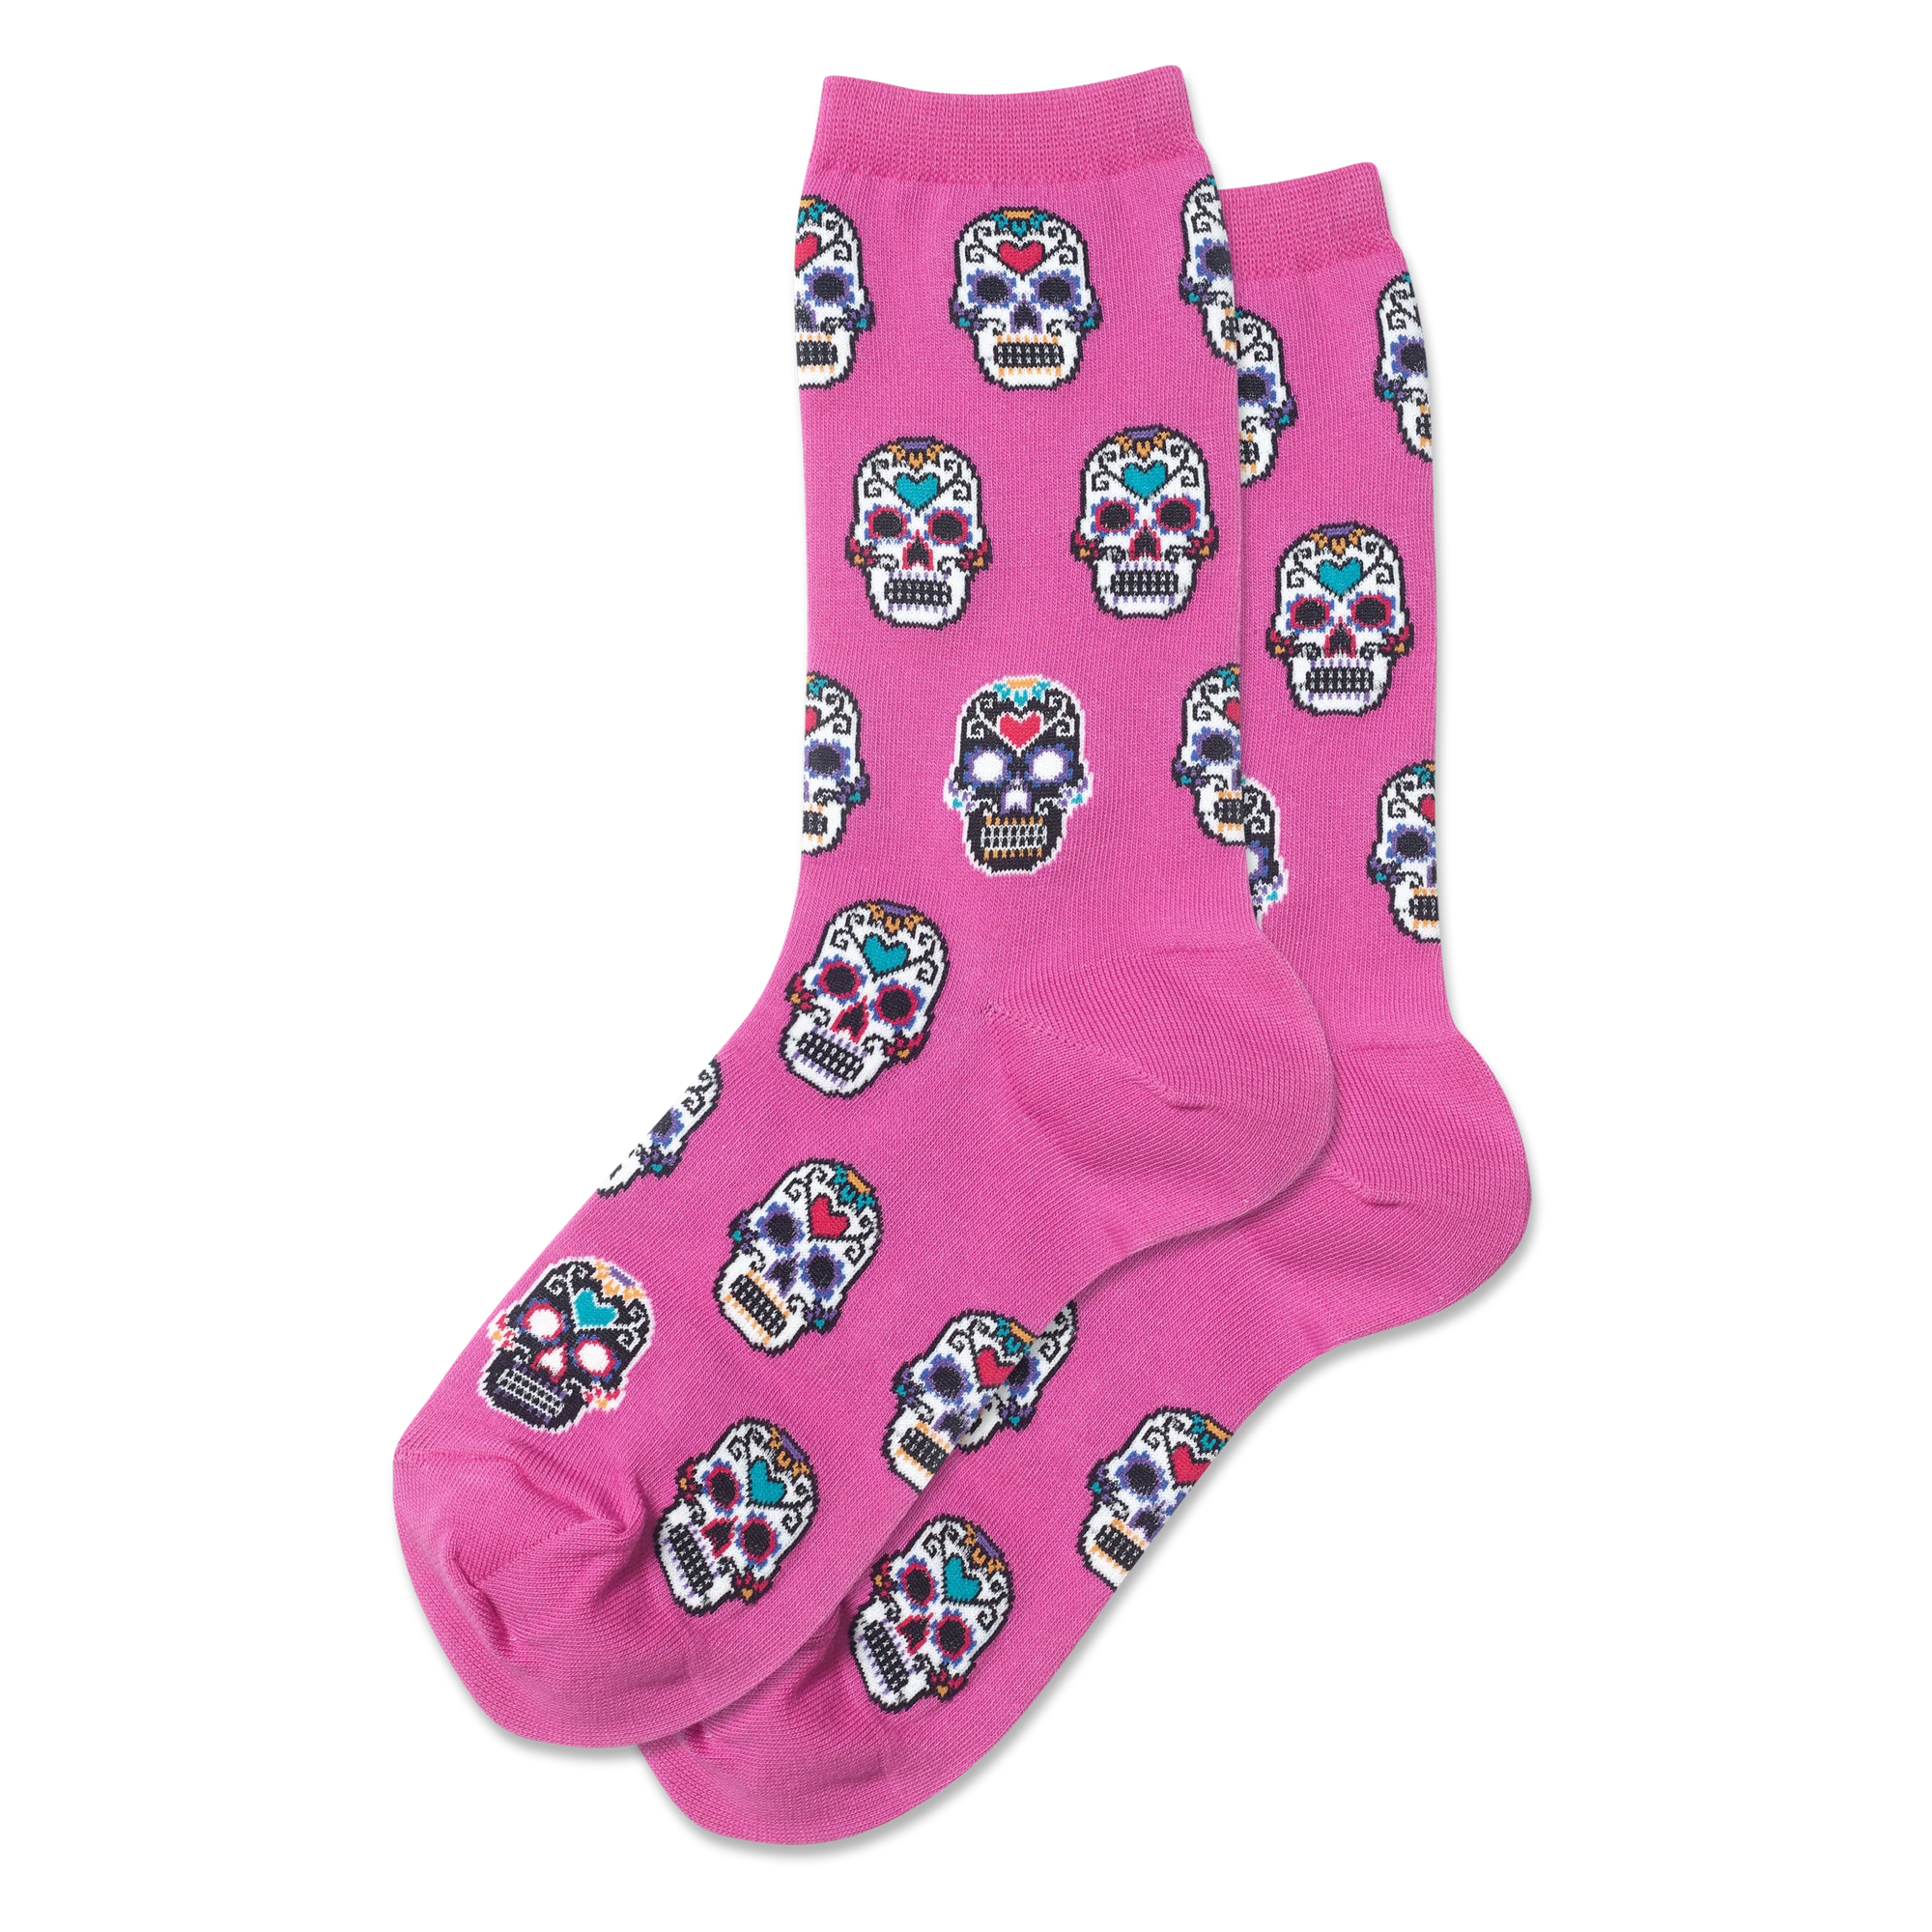 Hotsox Women's Sugar Skulls Socks 1 Pair, Pink, Women's 4-10 Shoe